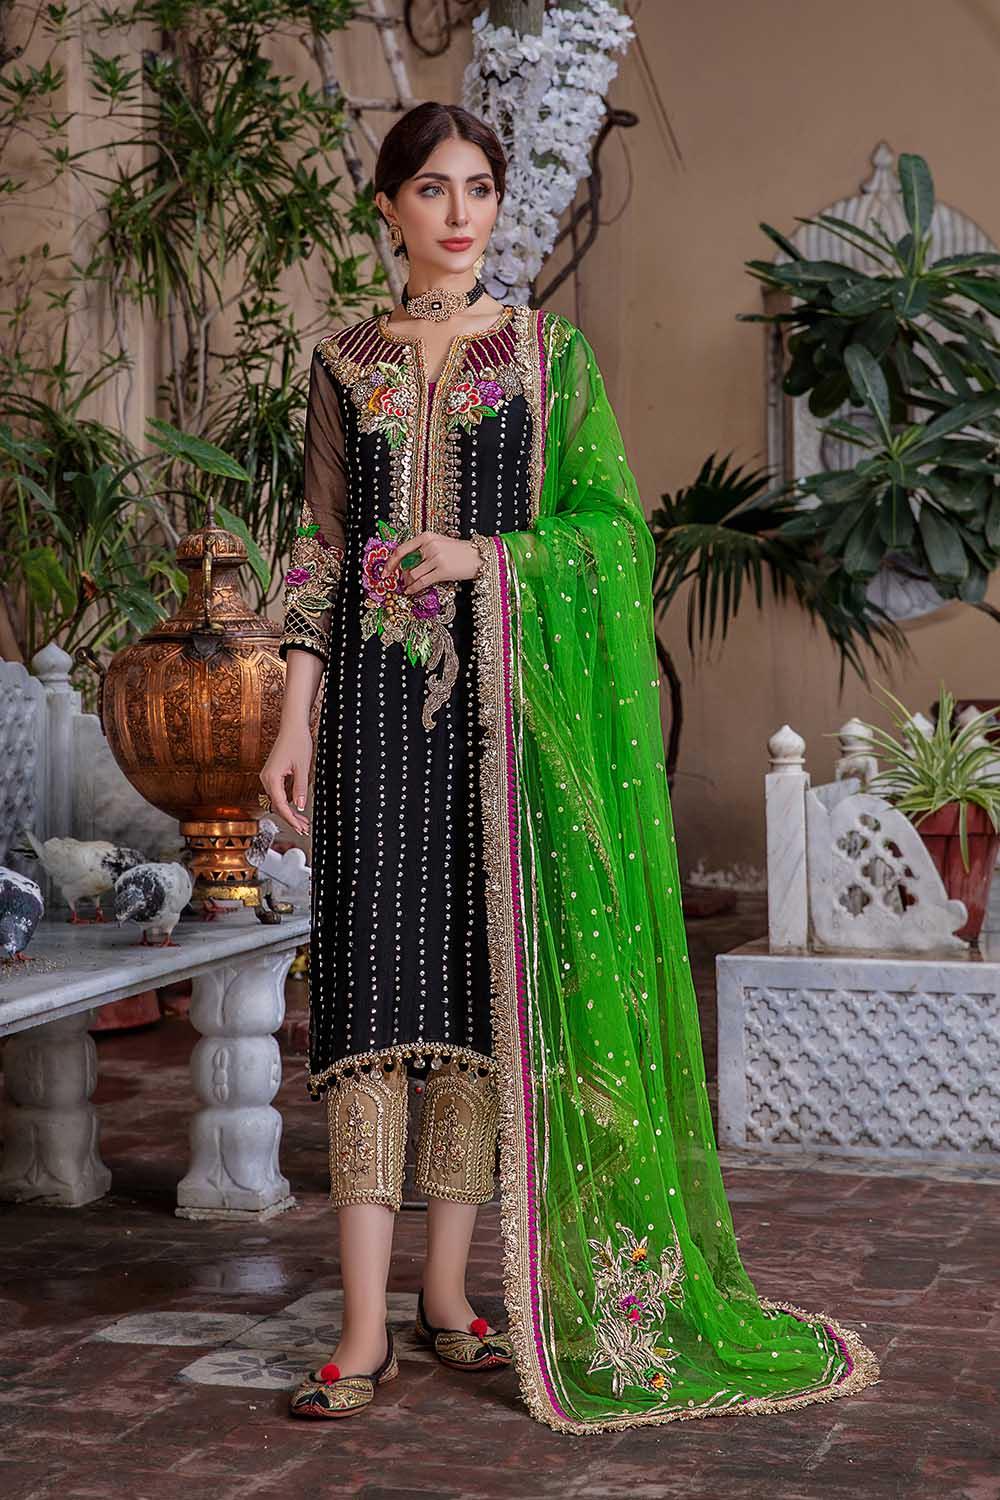  Khuda Baksh - Pakistani clothes